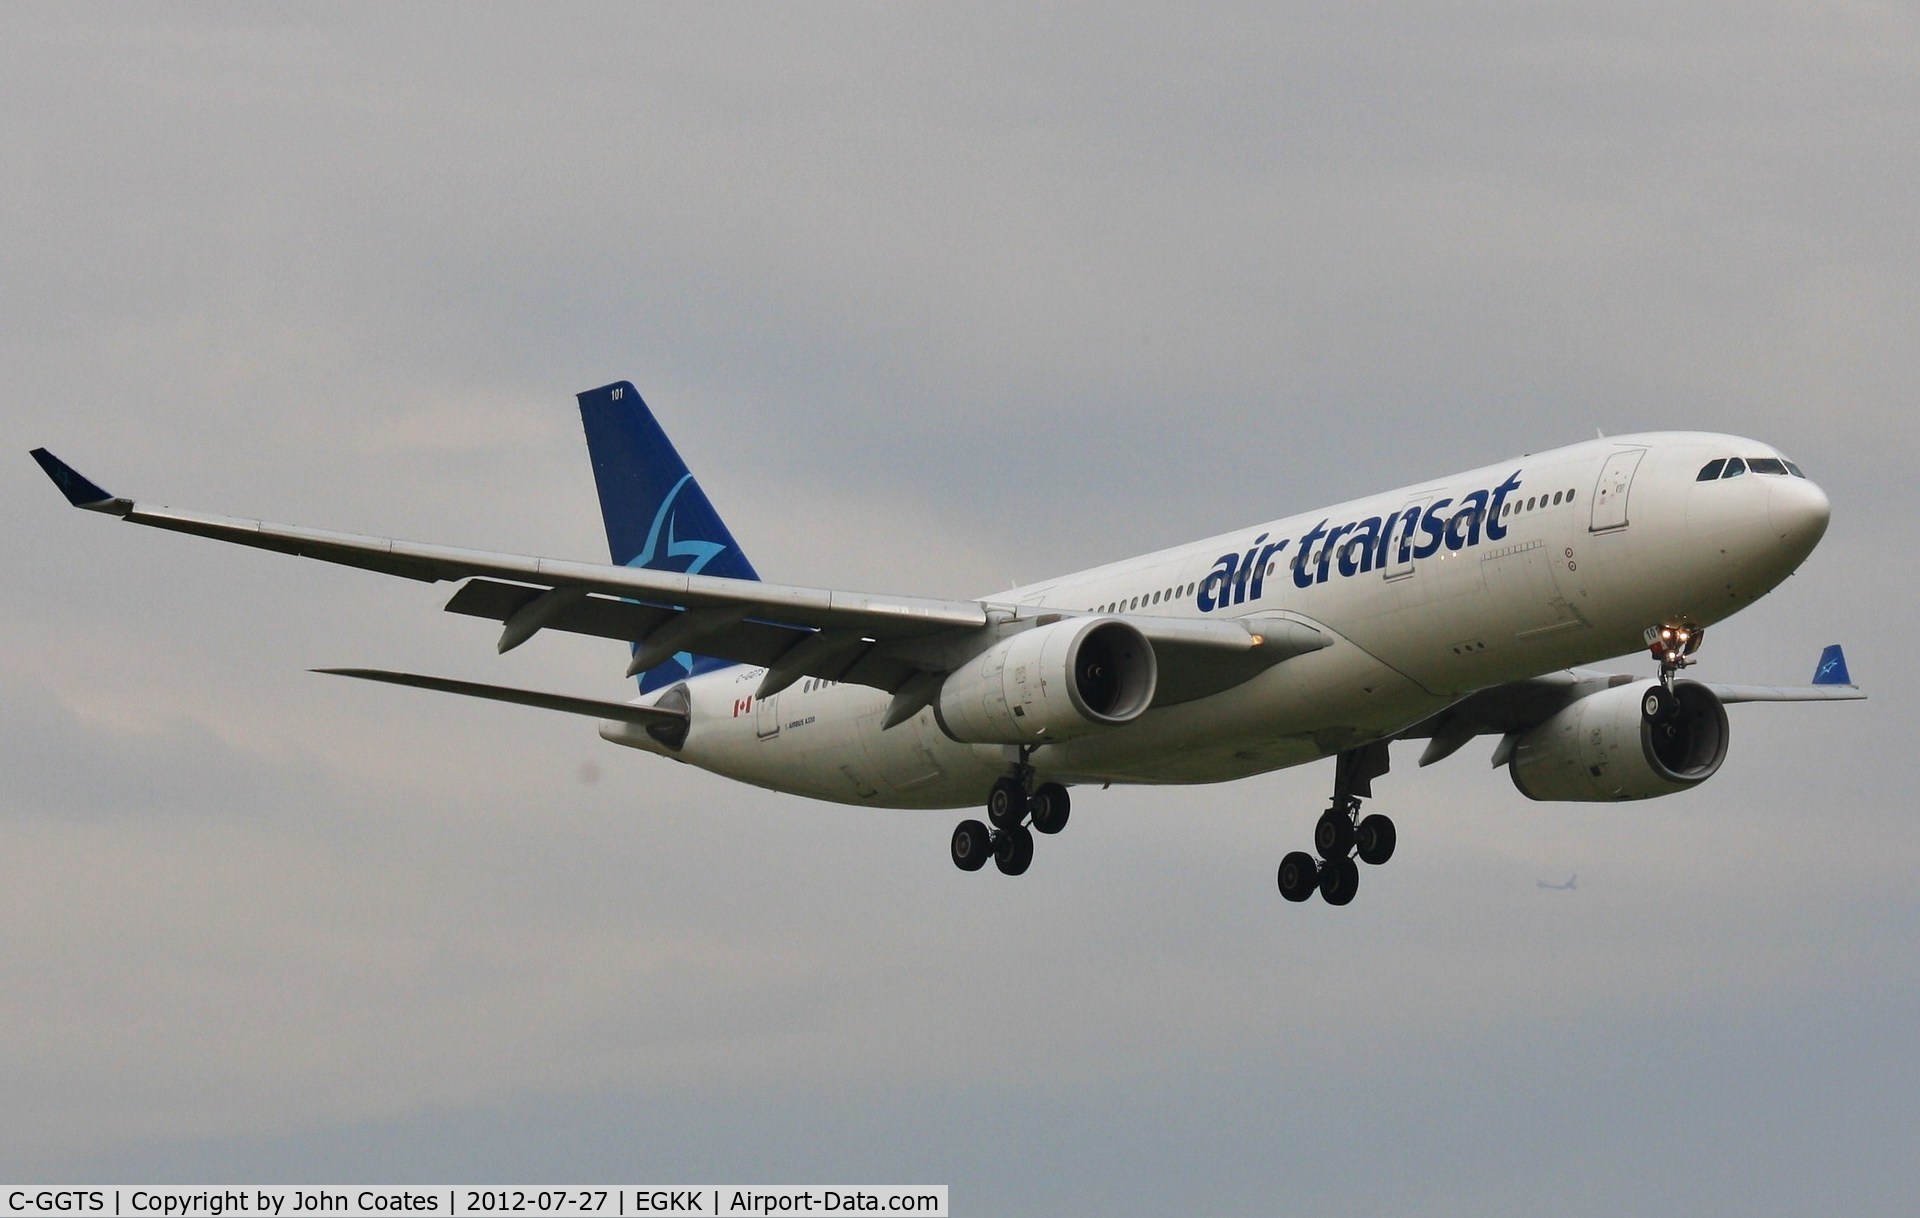 C-GGTS, 1999 Airbus A330-243 C/N 250, Finals 08